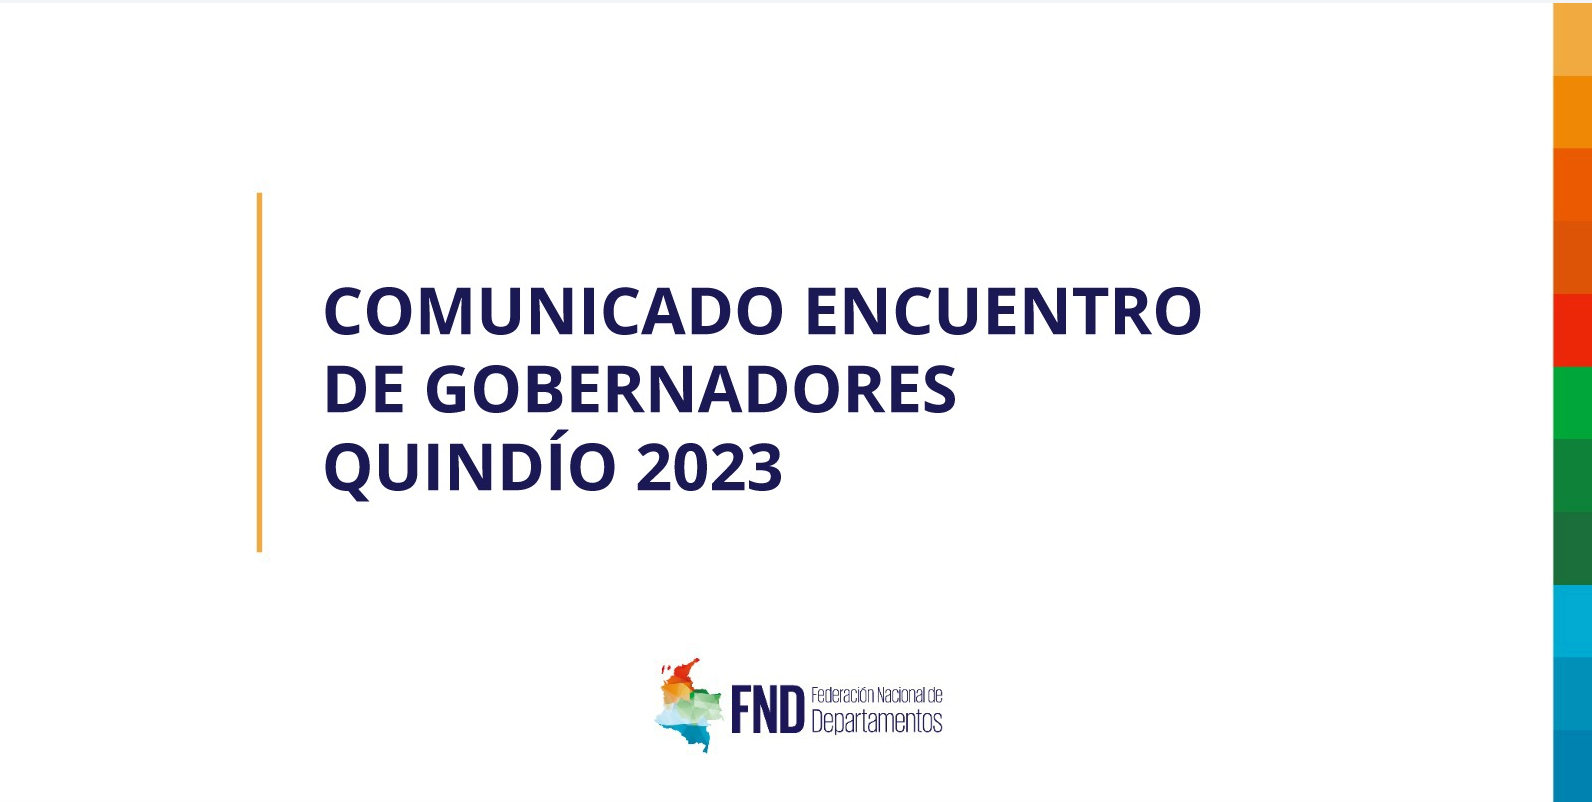 image Comunicado Encuentro de Gobernadores Quindío 2023